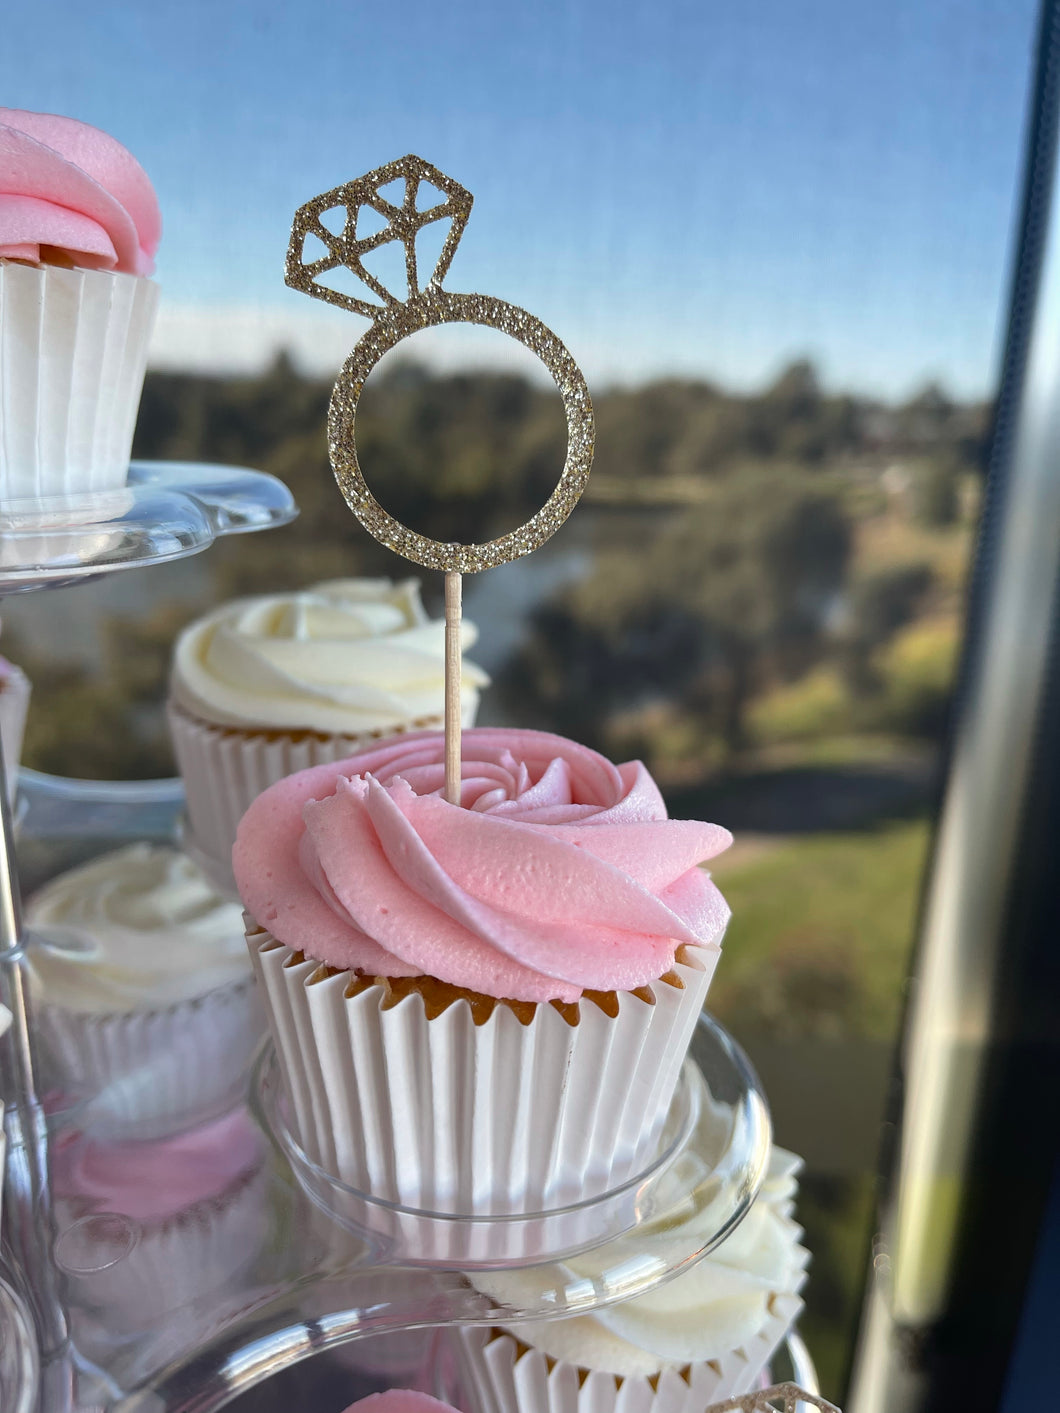 Bridal Shower Cupcake Topper - Ring